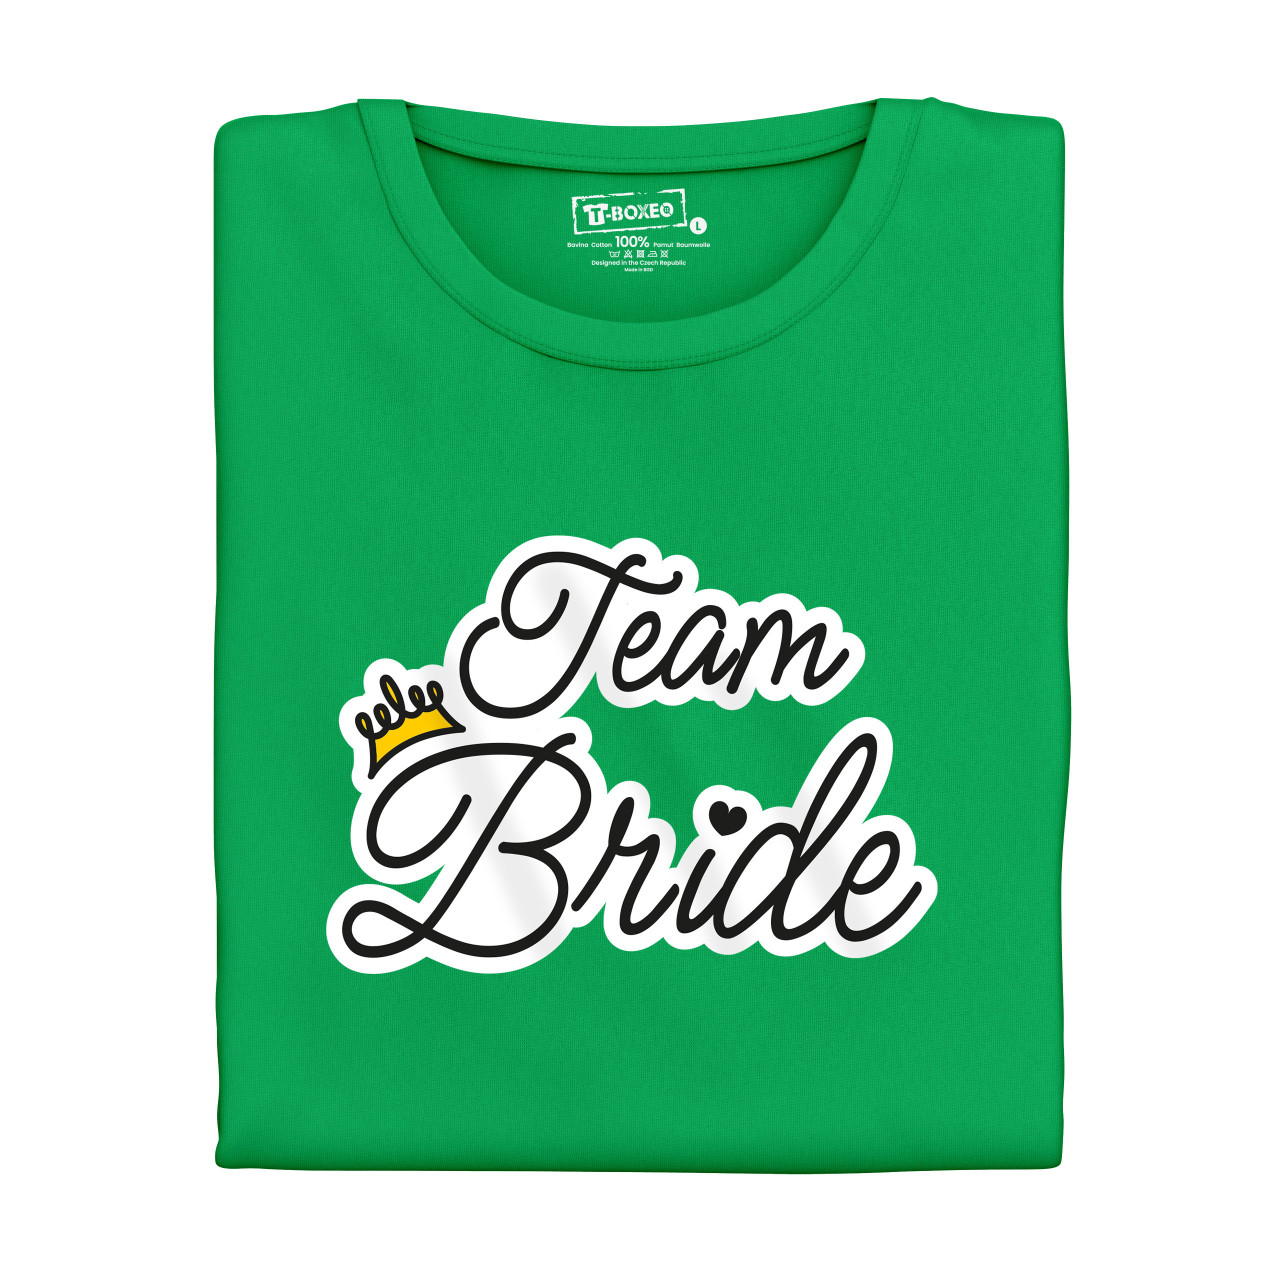 Dámské tričko s potiskem “Team Bride”